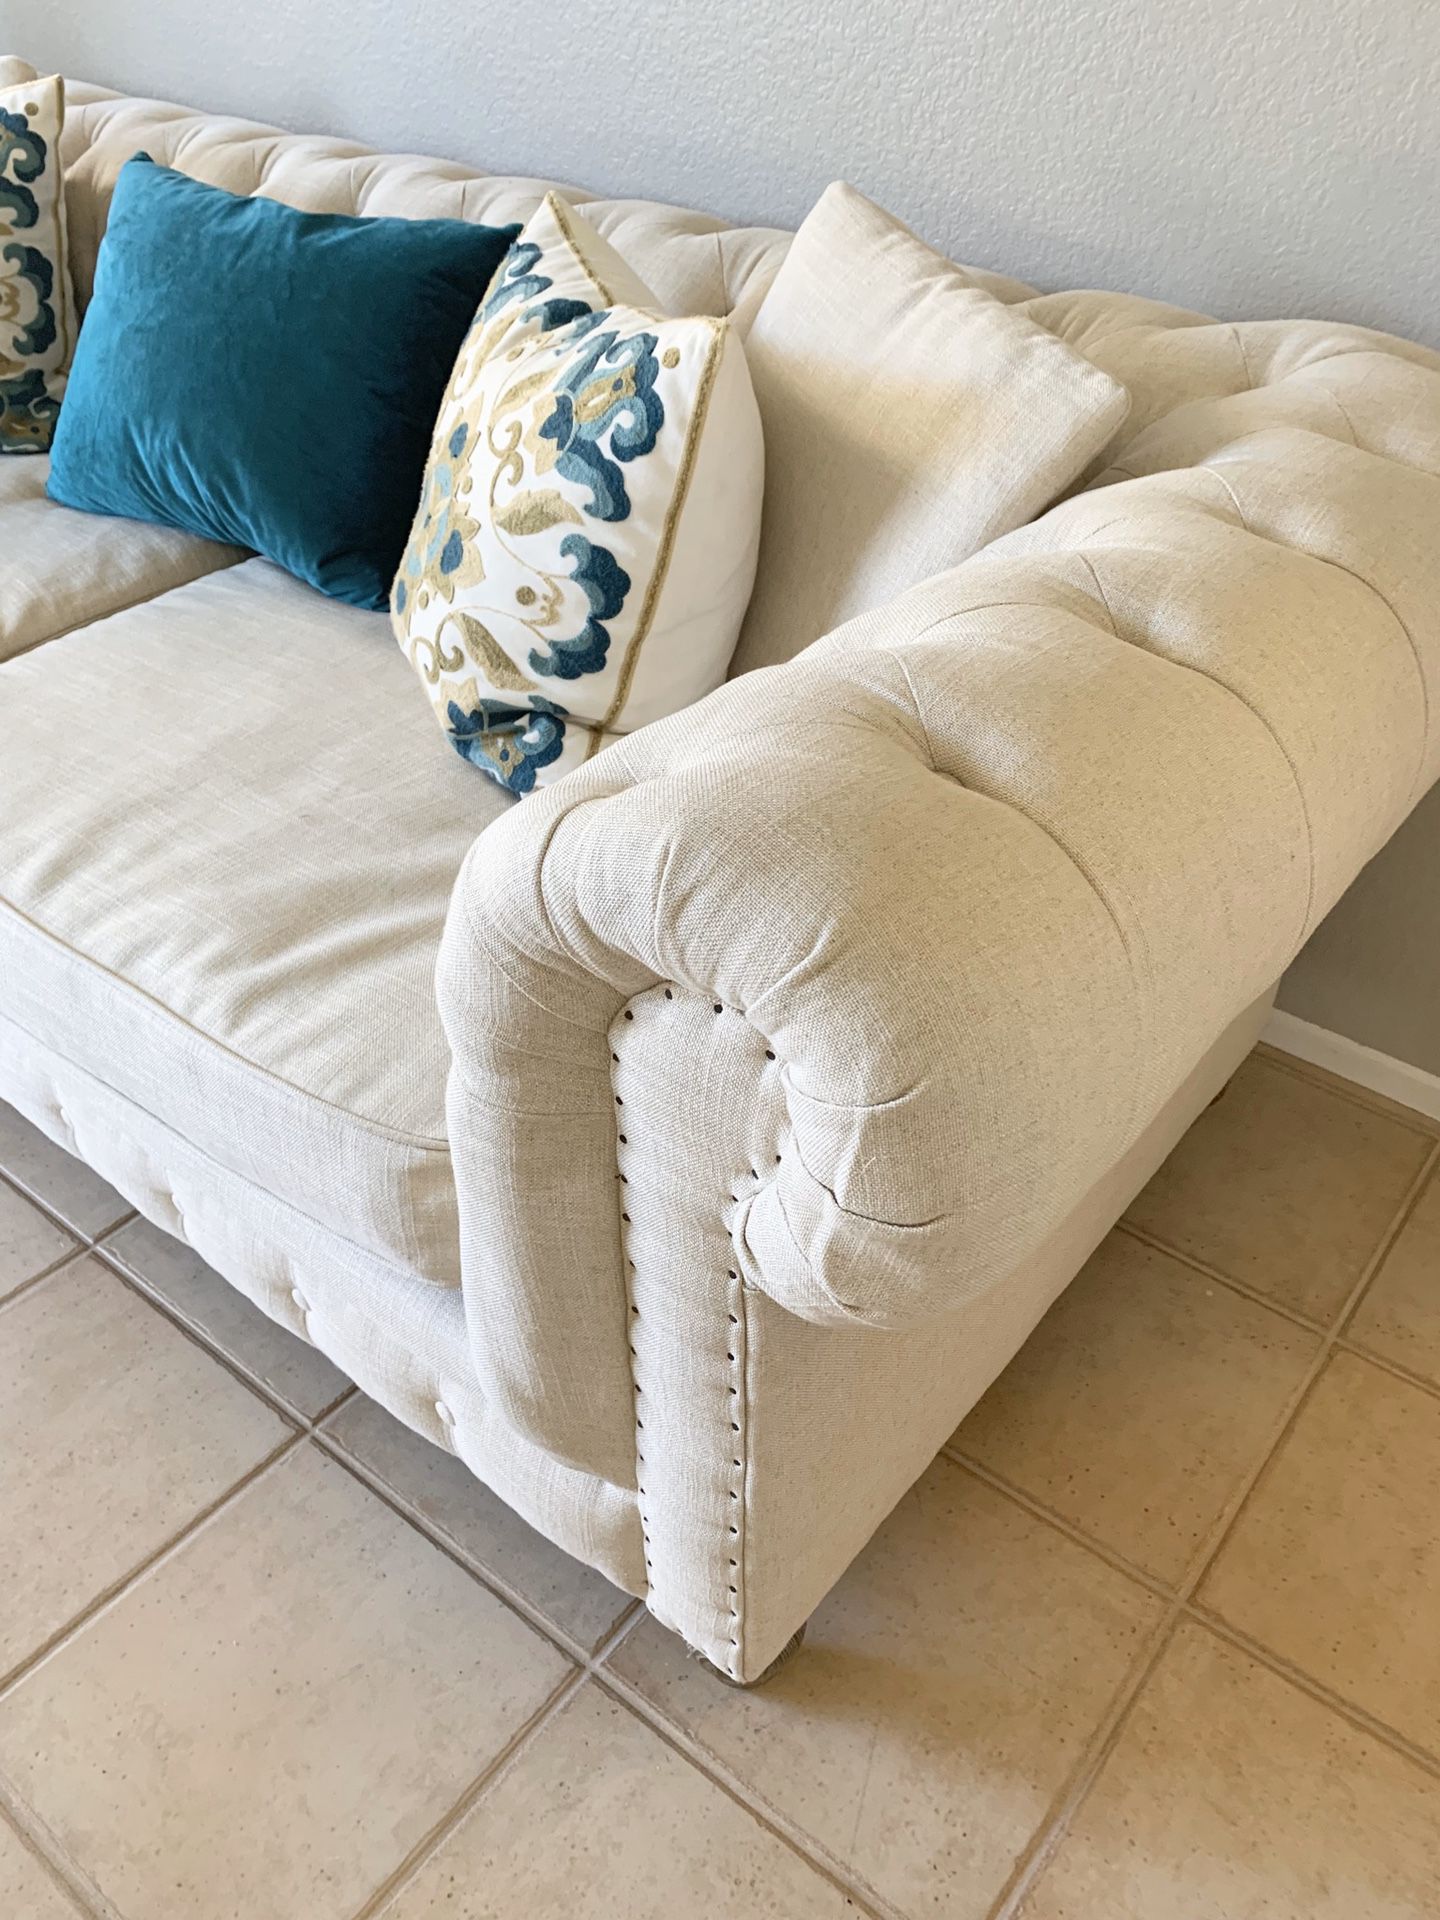 Cream color tuffed sofa couch